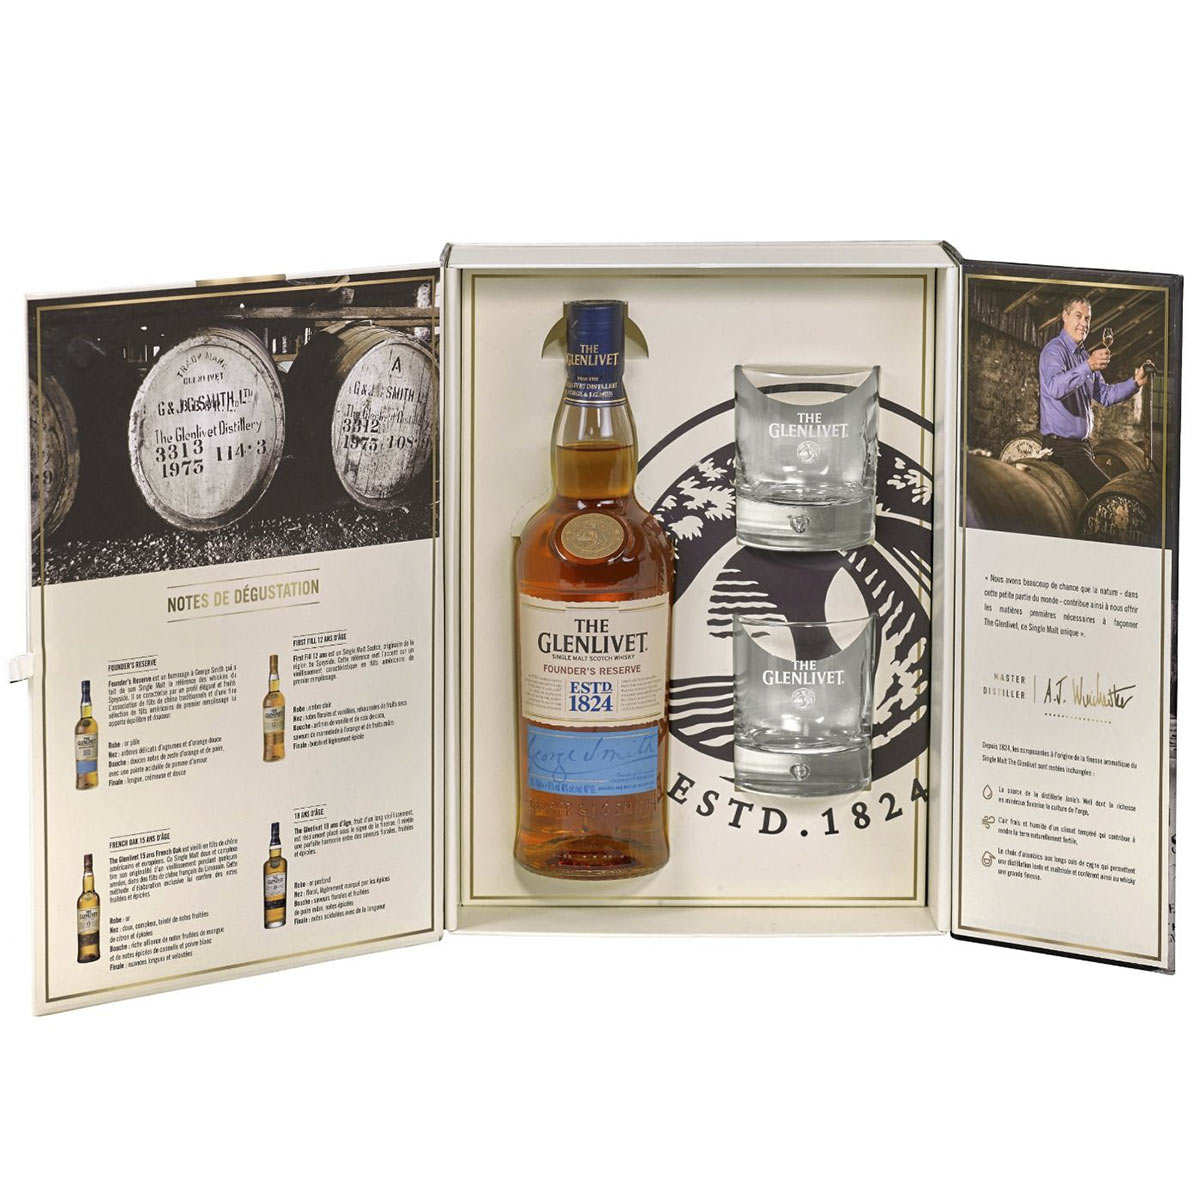 Coffret Whisky Single Malt Collector Coastal 3x20cl (Caol Ila, Talisker,  Clynelish) - Classic Malts Selection